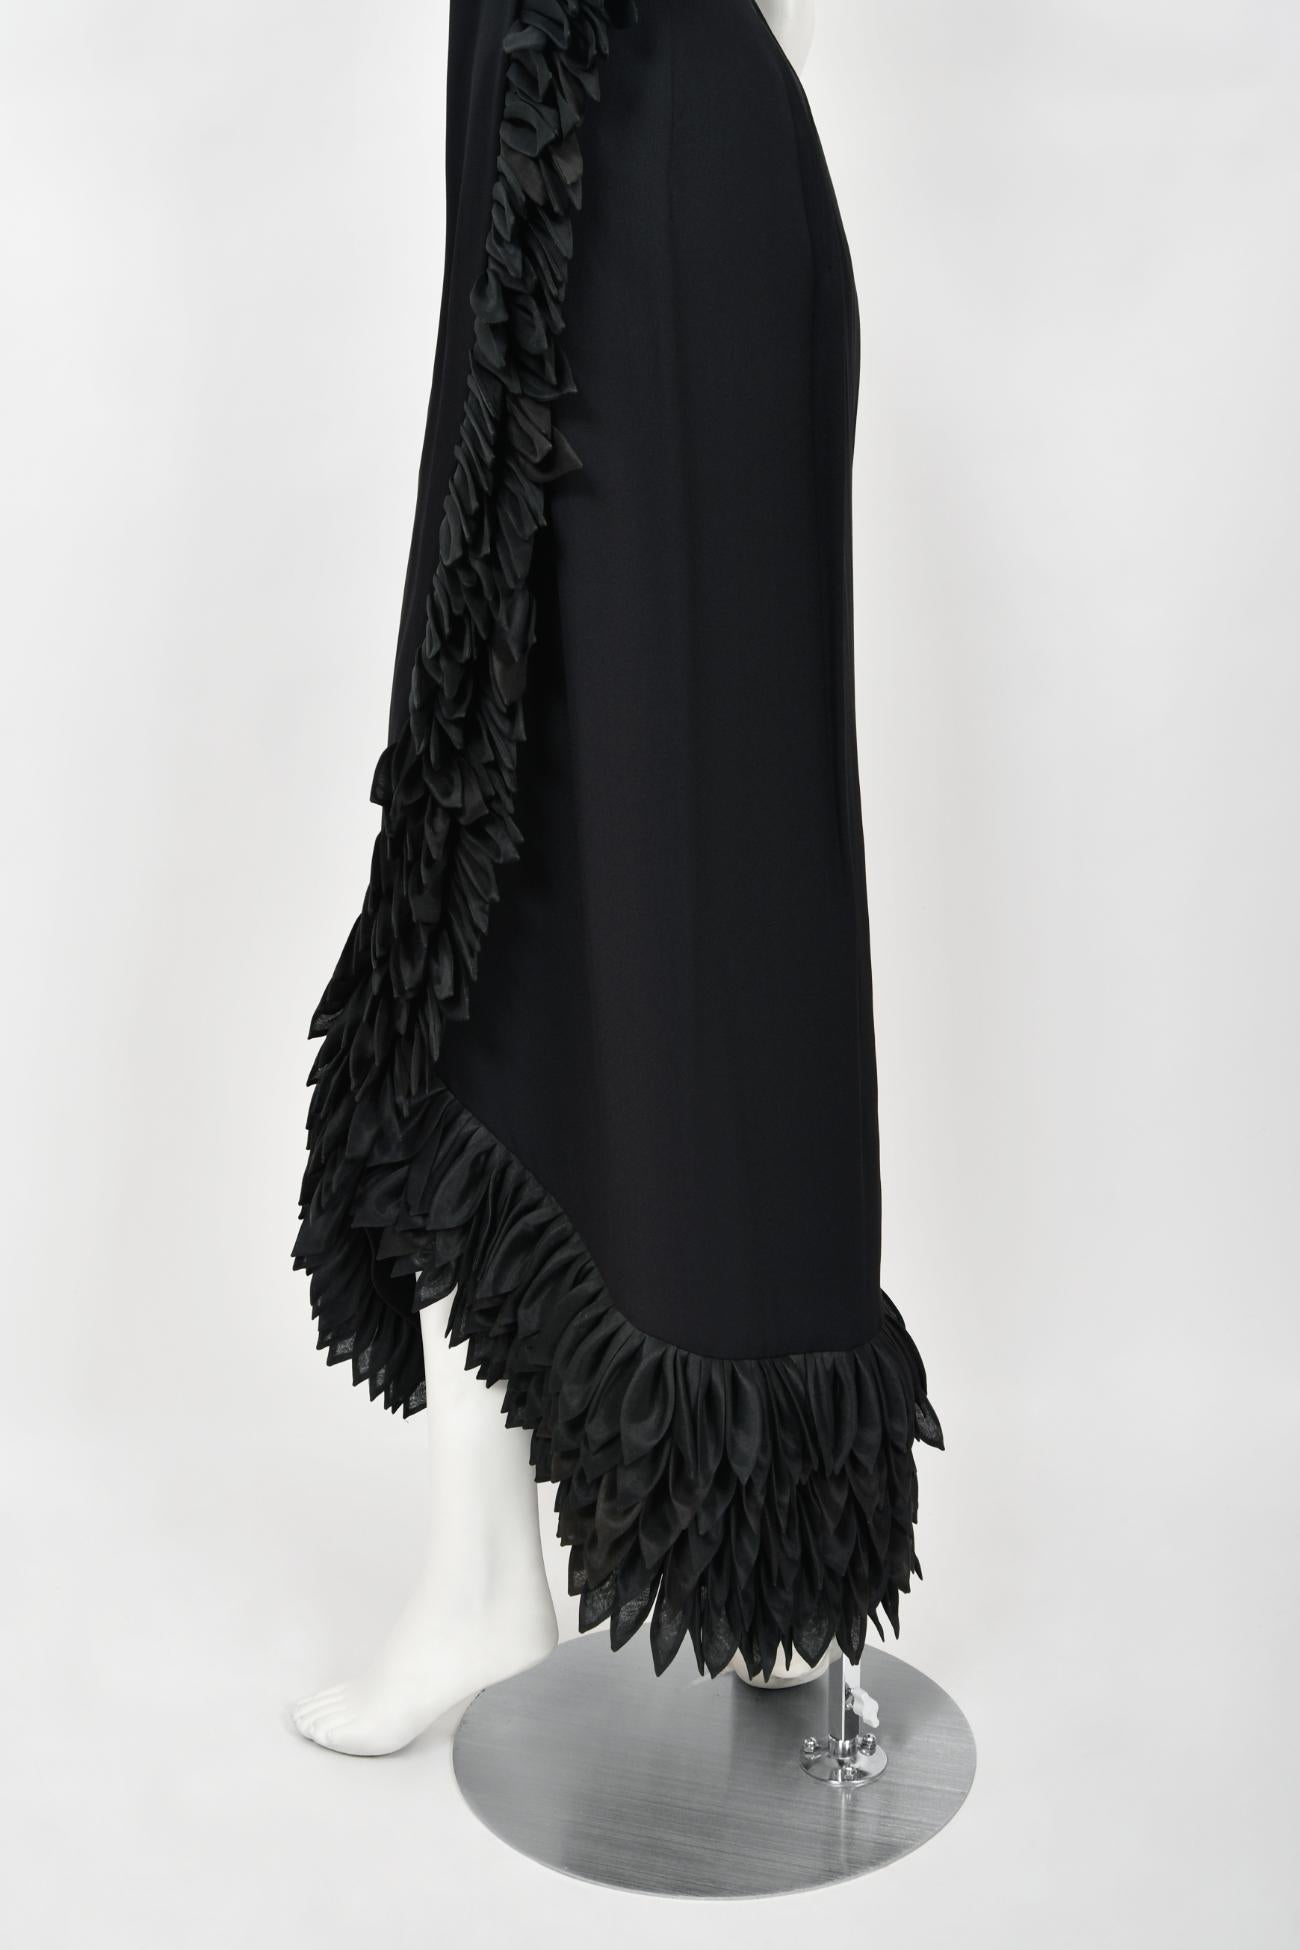 1959 Hall Ludlow Couture Museum-Held Black Silk Appliquéd Petals Hourglass Gown  9